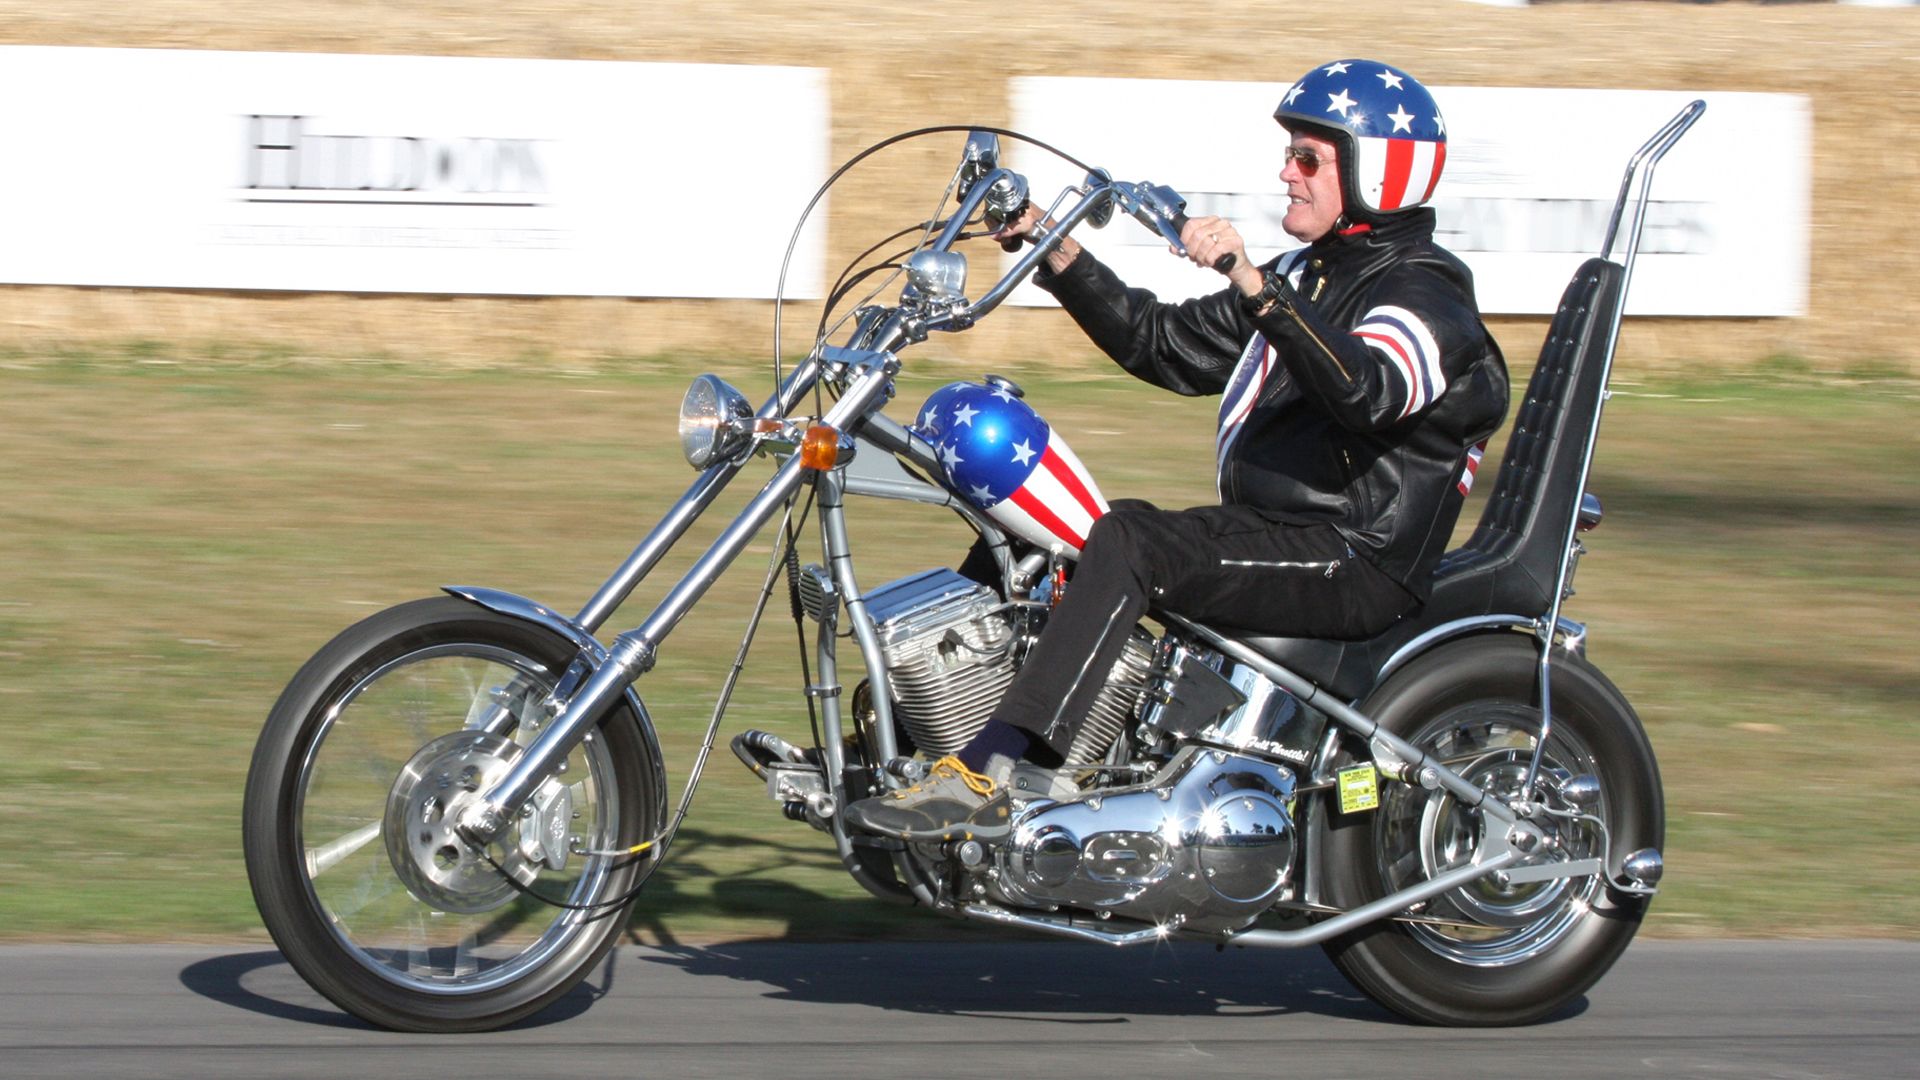 Peter Fonda riding Captain America Chopper Motorcycle